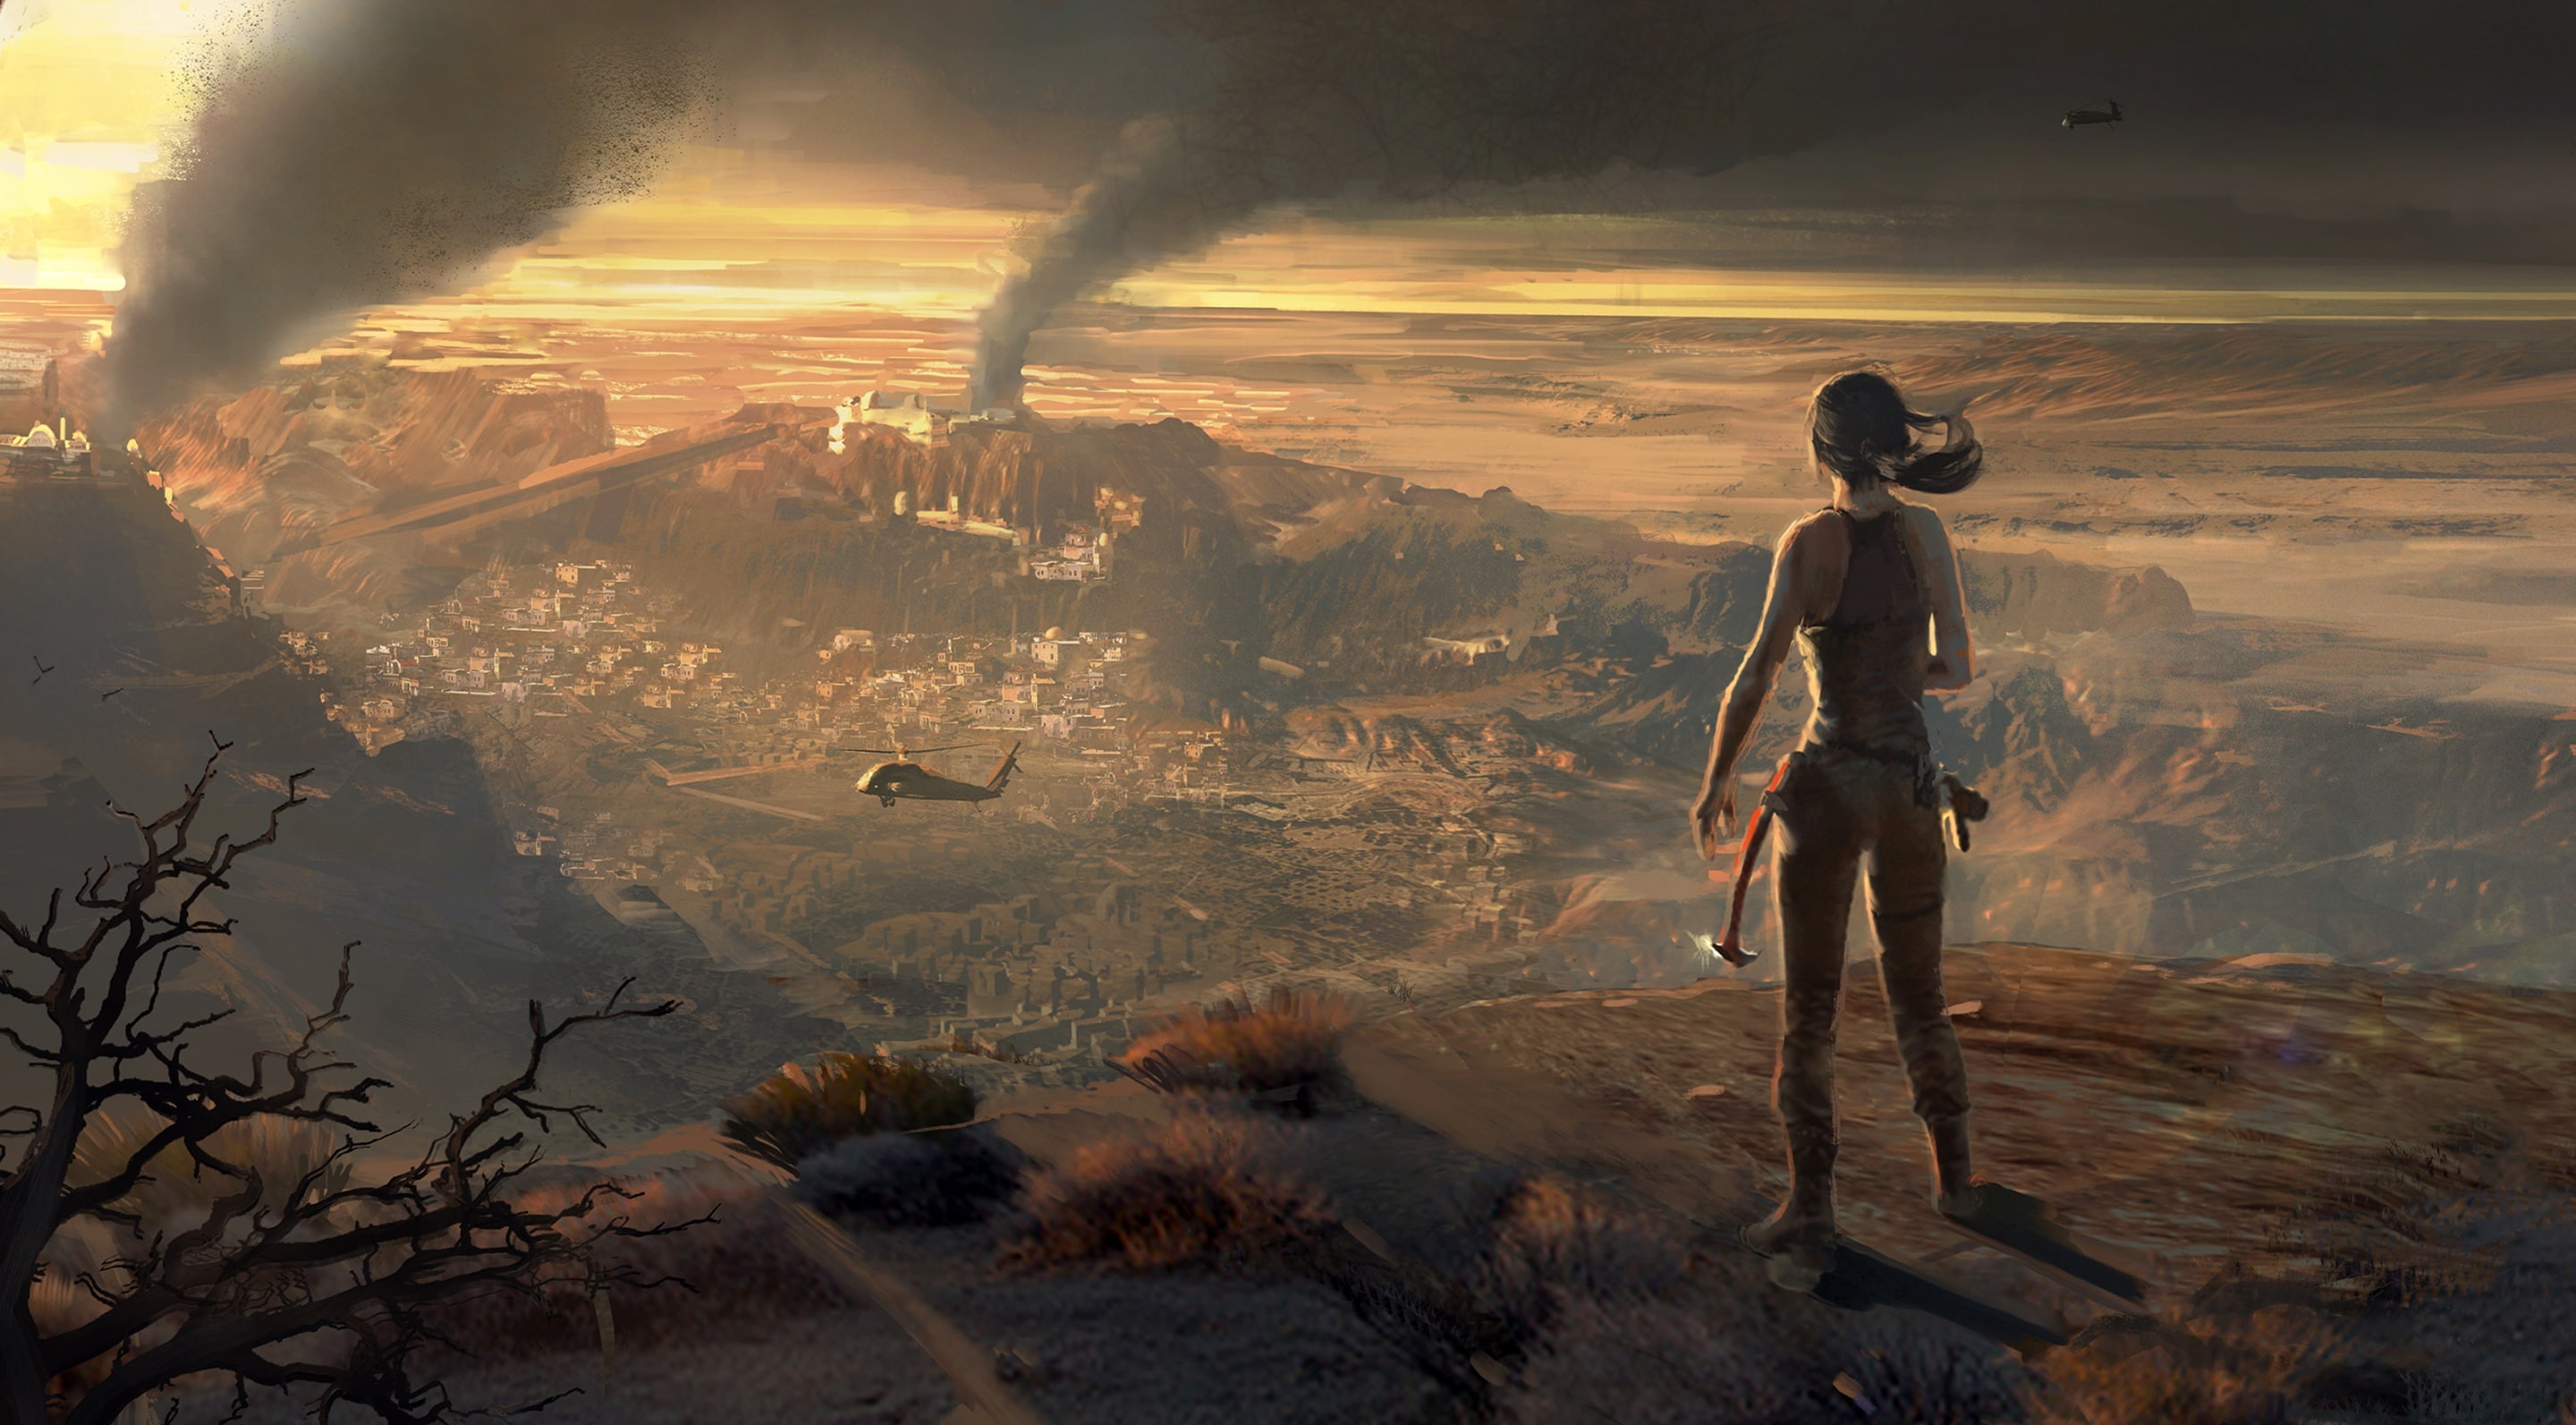 ROTTR Concept Art, Games, Tomb Raider, Landscape, Journey, Artwork